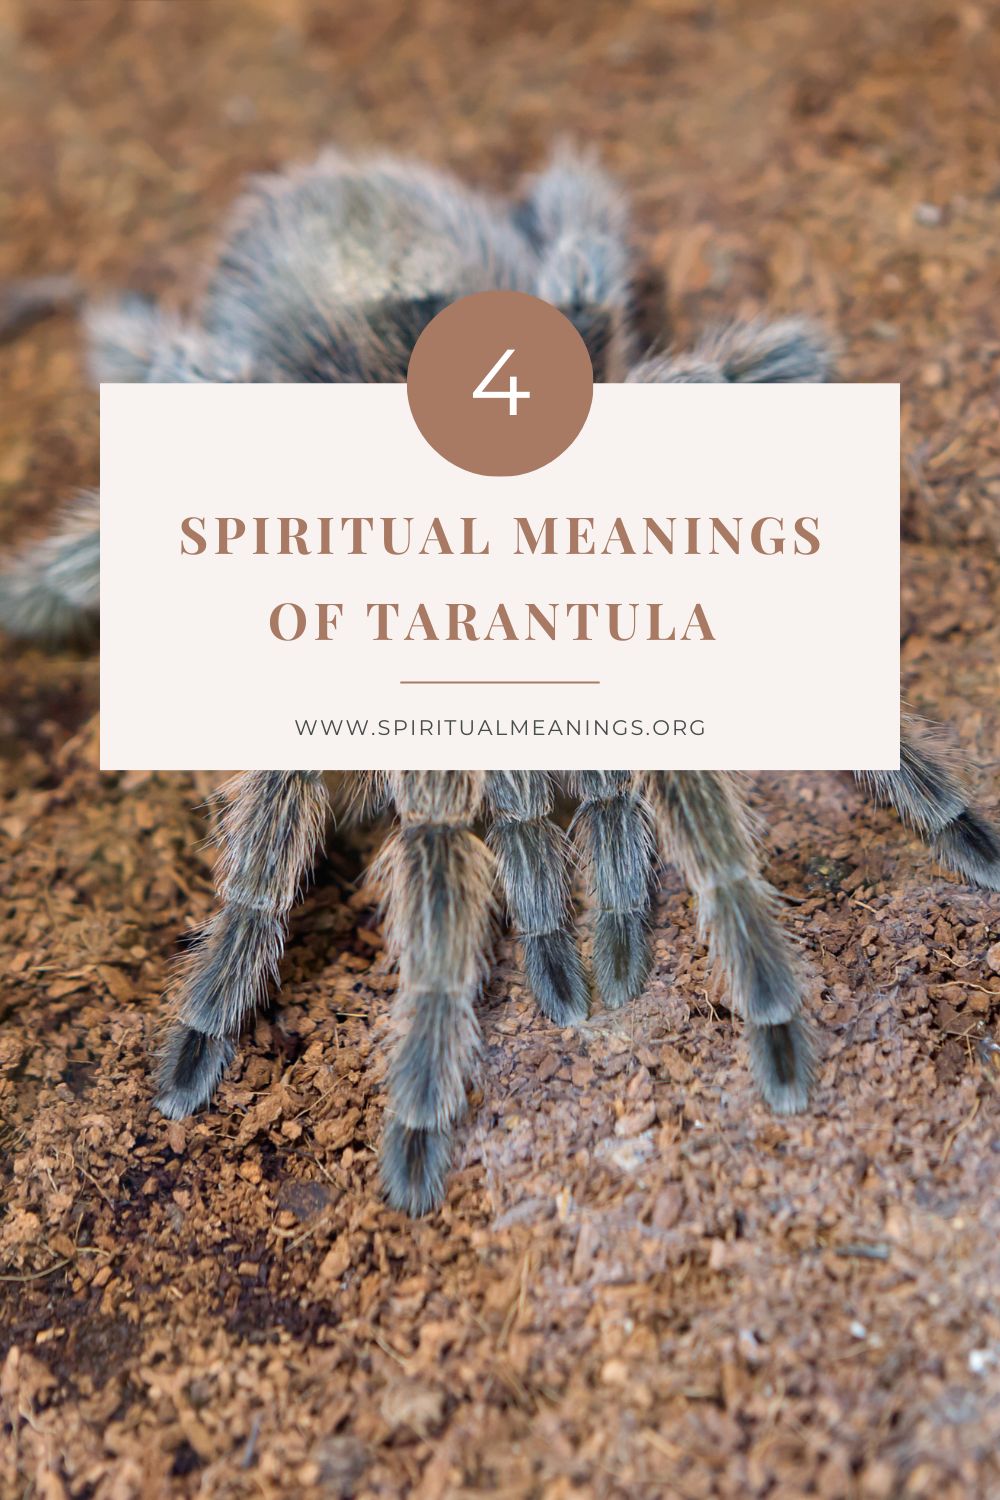 What is a Tarantula?